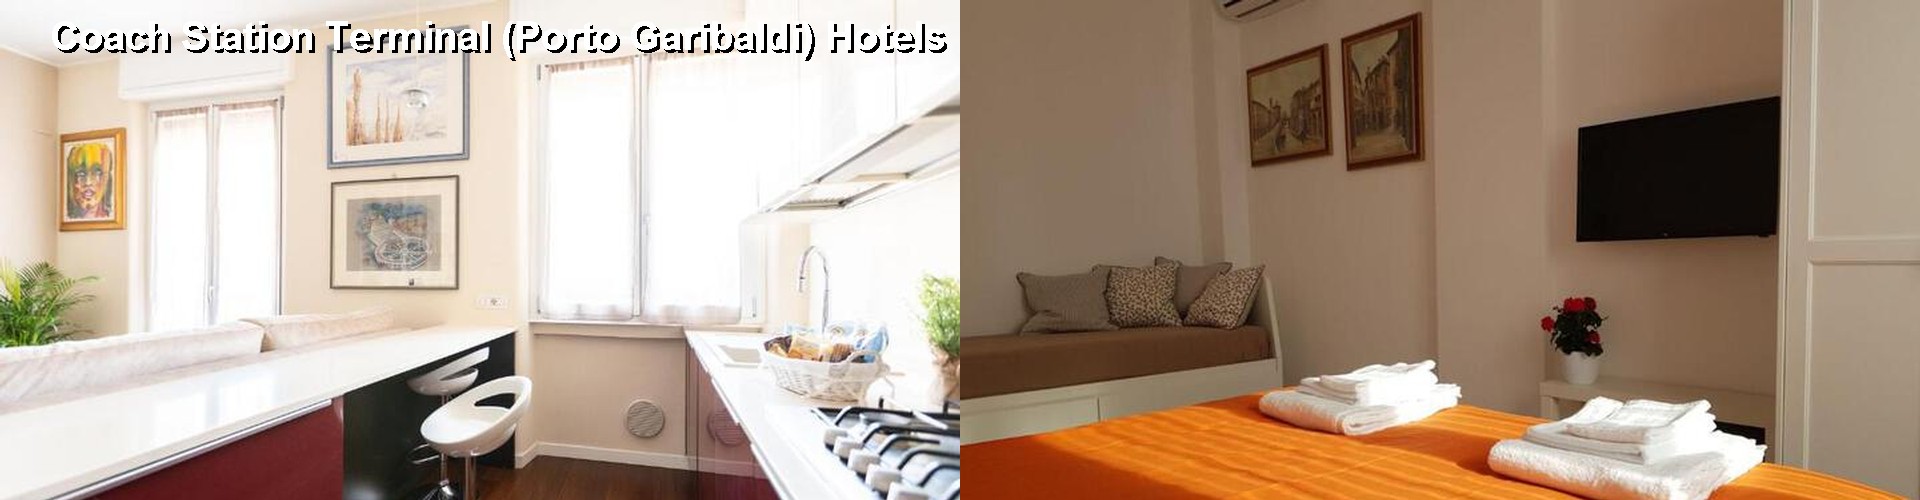 5 Best Hotels near Coach Station Terminal (Porto Garibaldi)